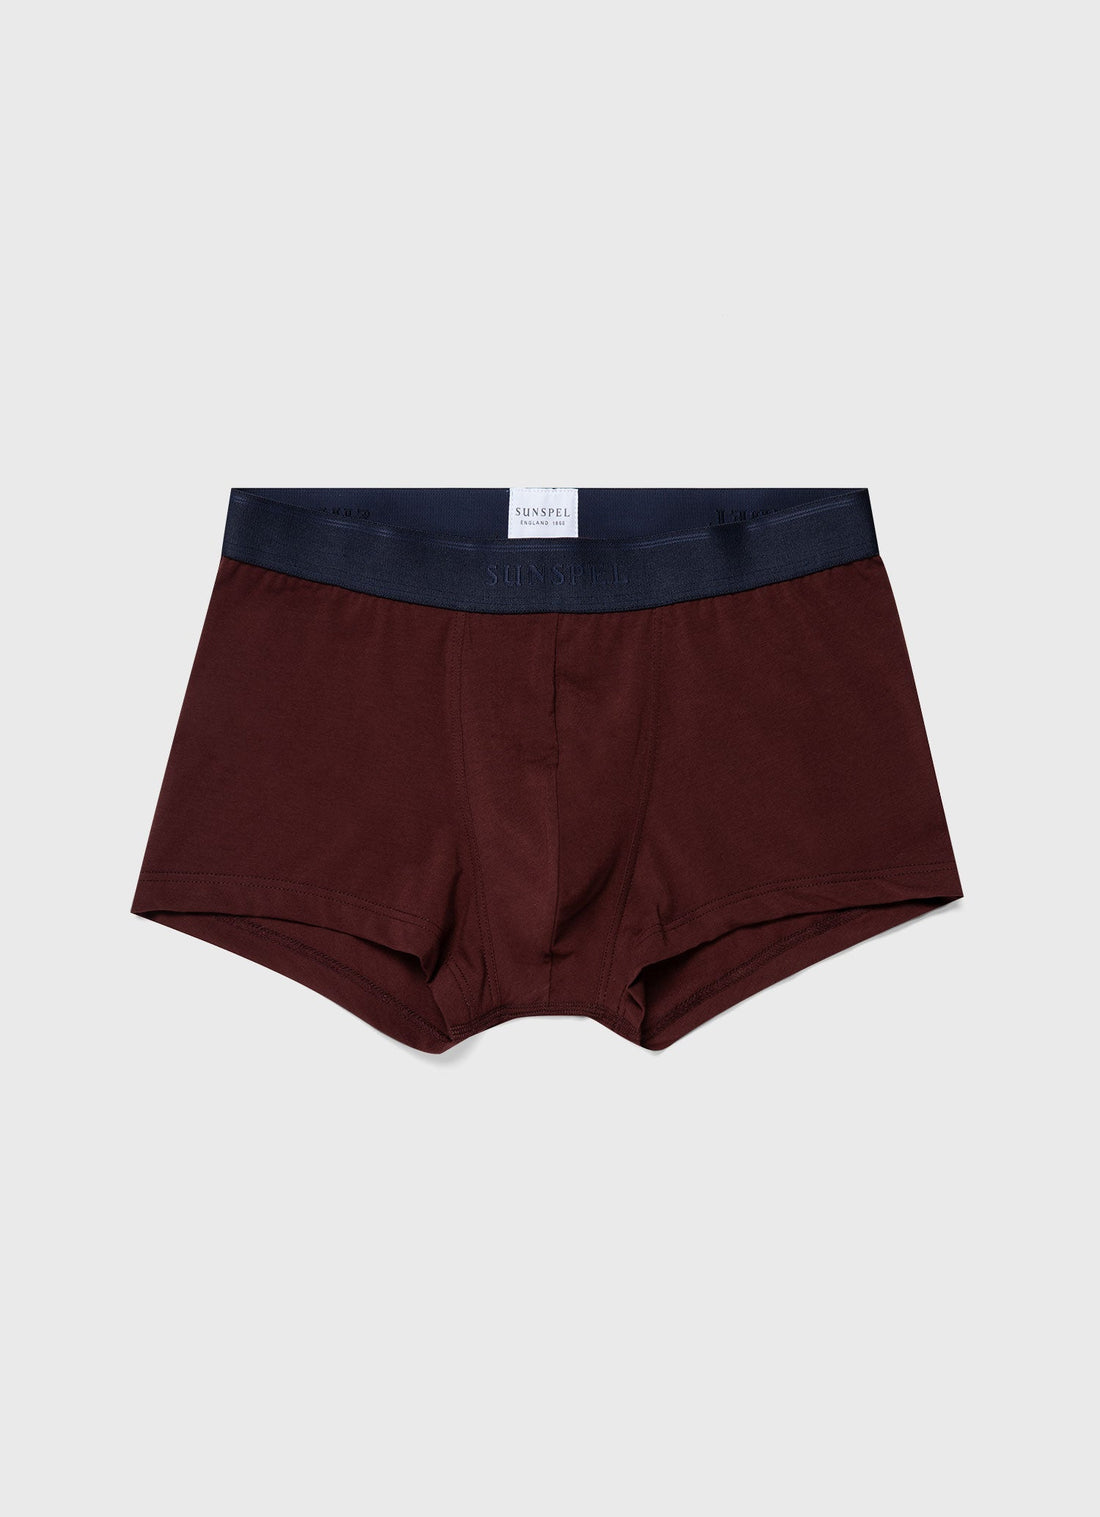 Shop Men's Underwear with styles such as men's vests, boxers, briefs,  trunks, pyjamas & more.